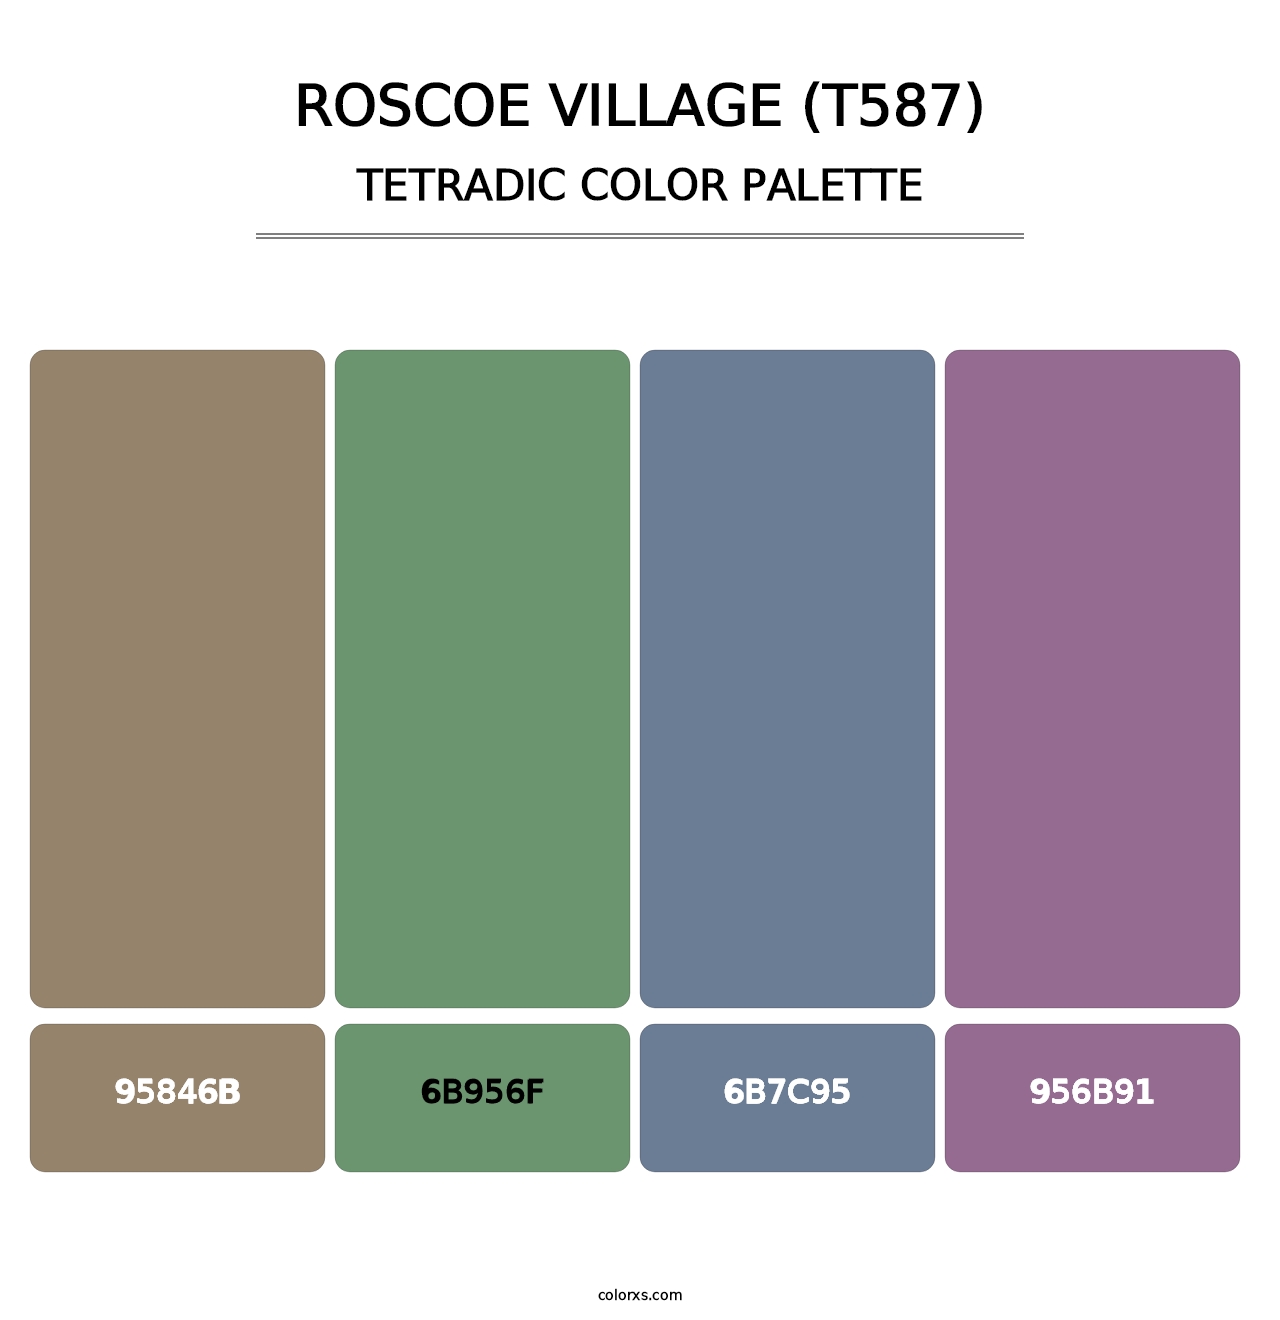 Roscoe Village (T587) - Tetradic Color Palette